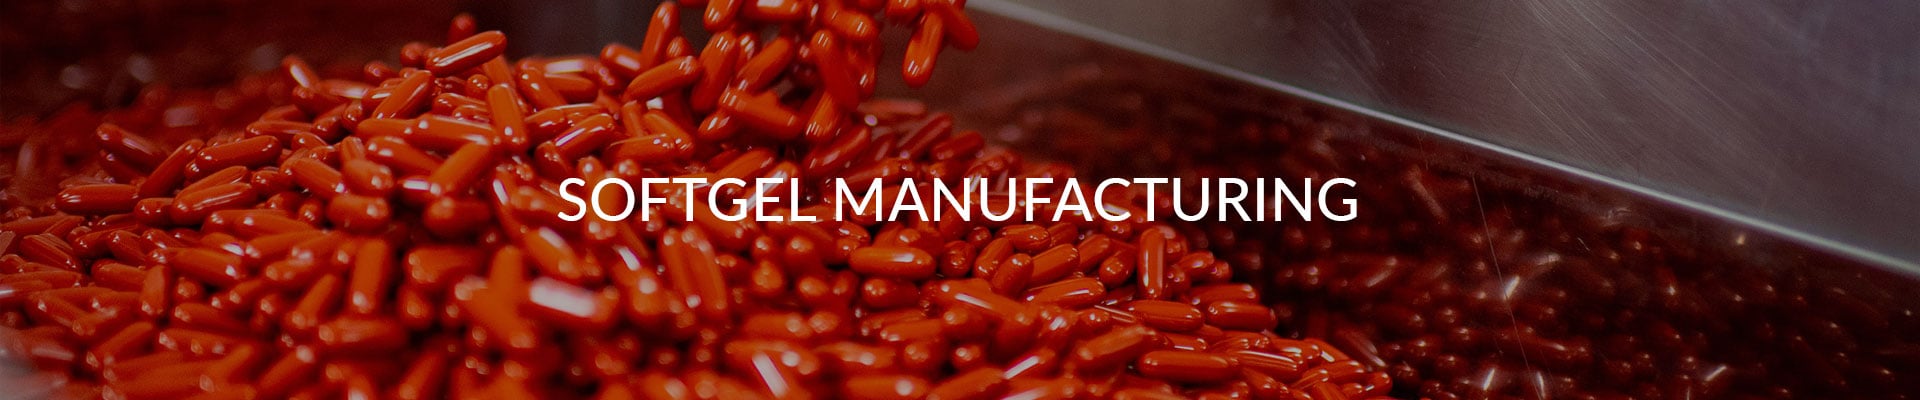 Softgel Manufacturing Robinson Pharma, Inc.